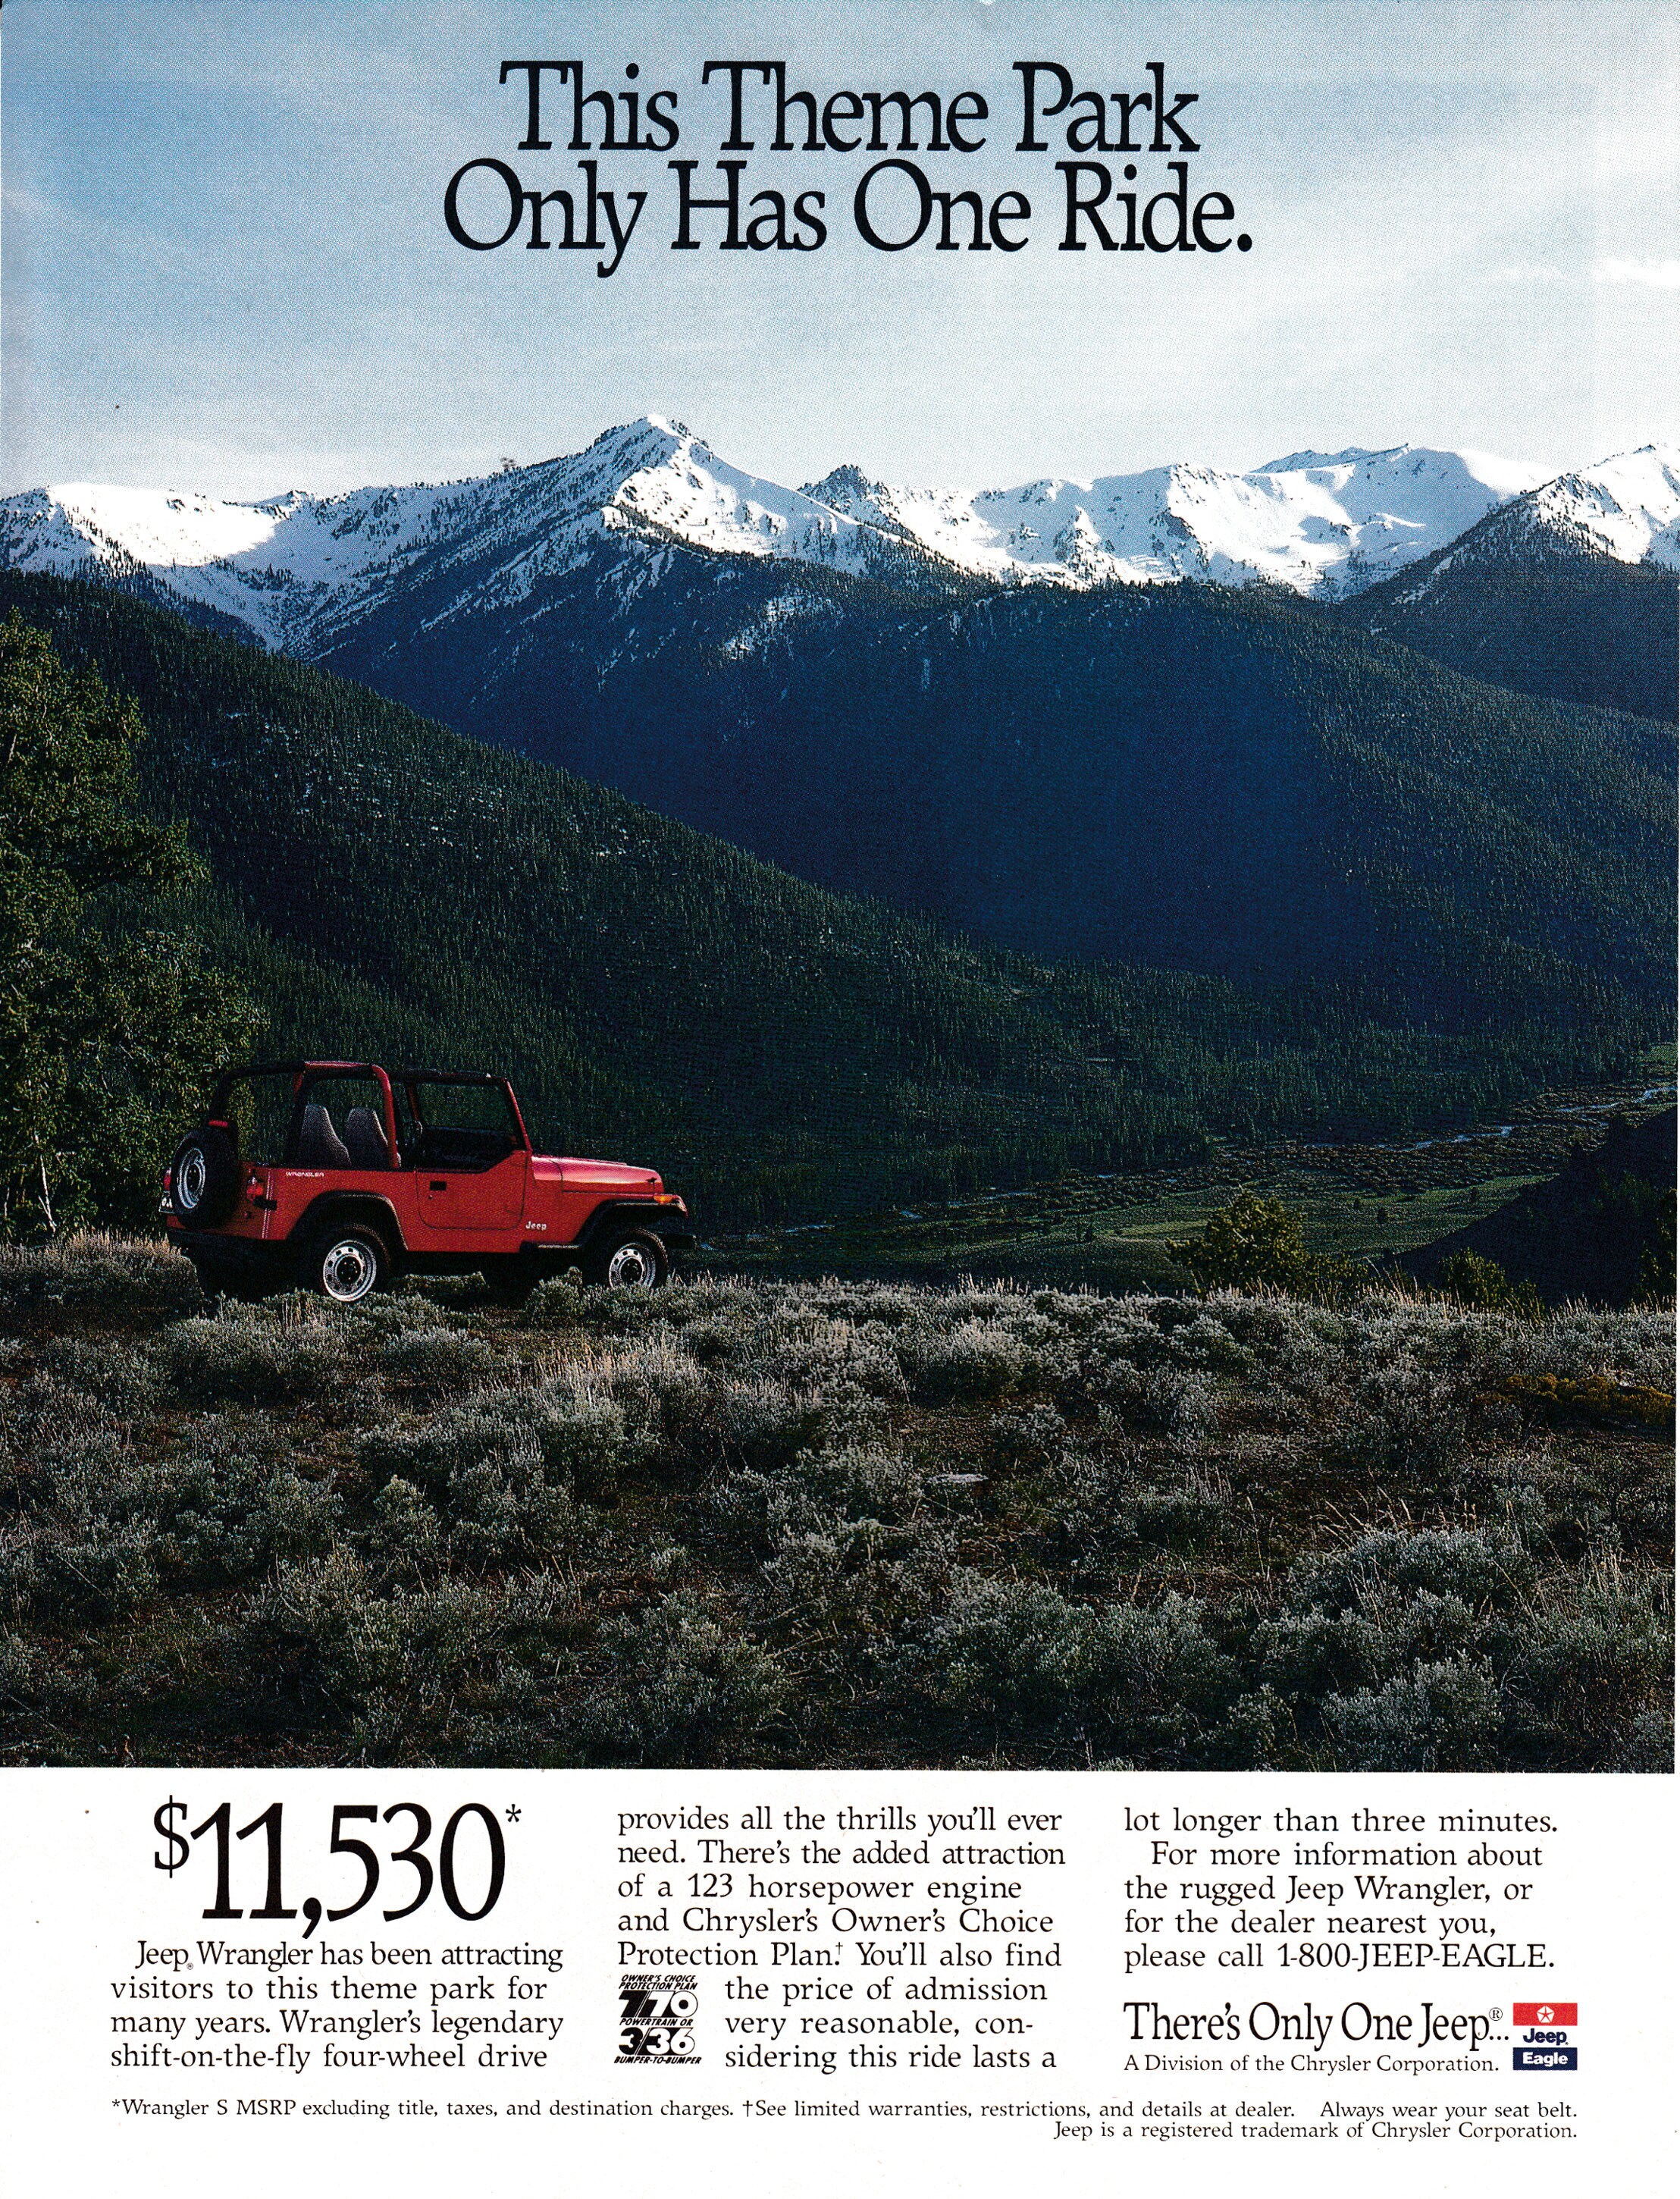 1994 Jeep Wrangler-123 Hp-like a Theme Park - Etsy